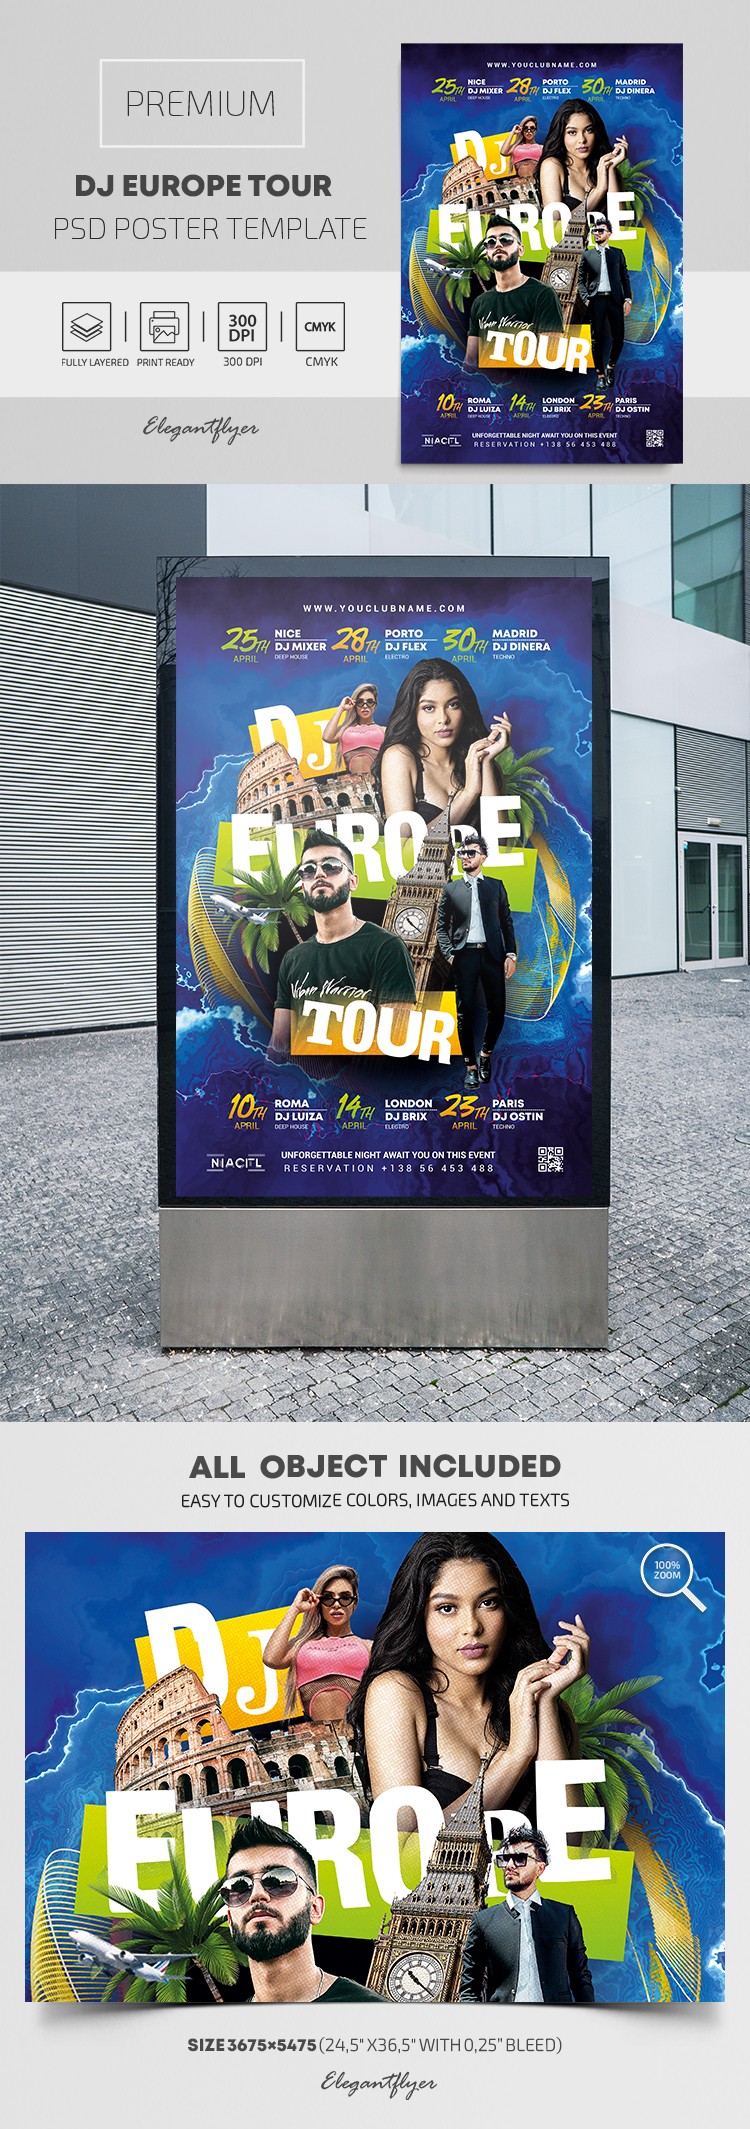 DJ Europe Tour - Premium PSD Poster Template by ElegantFlyer